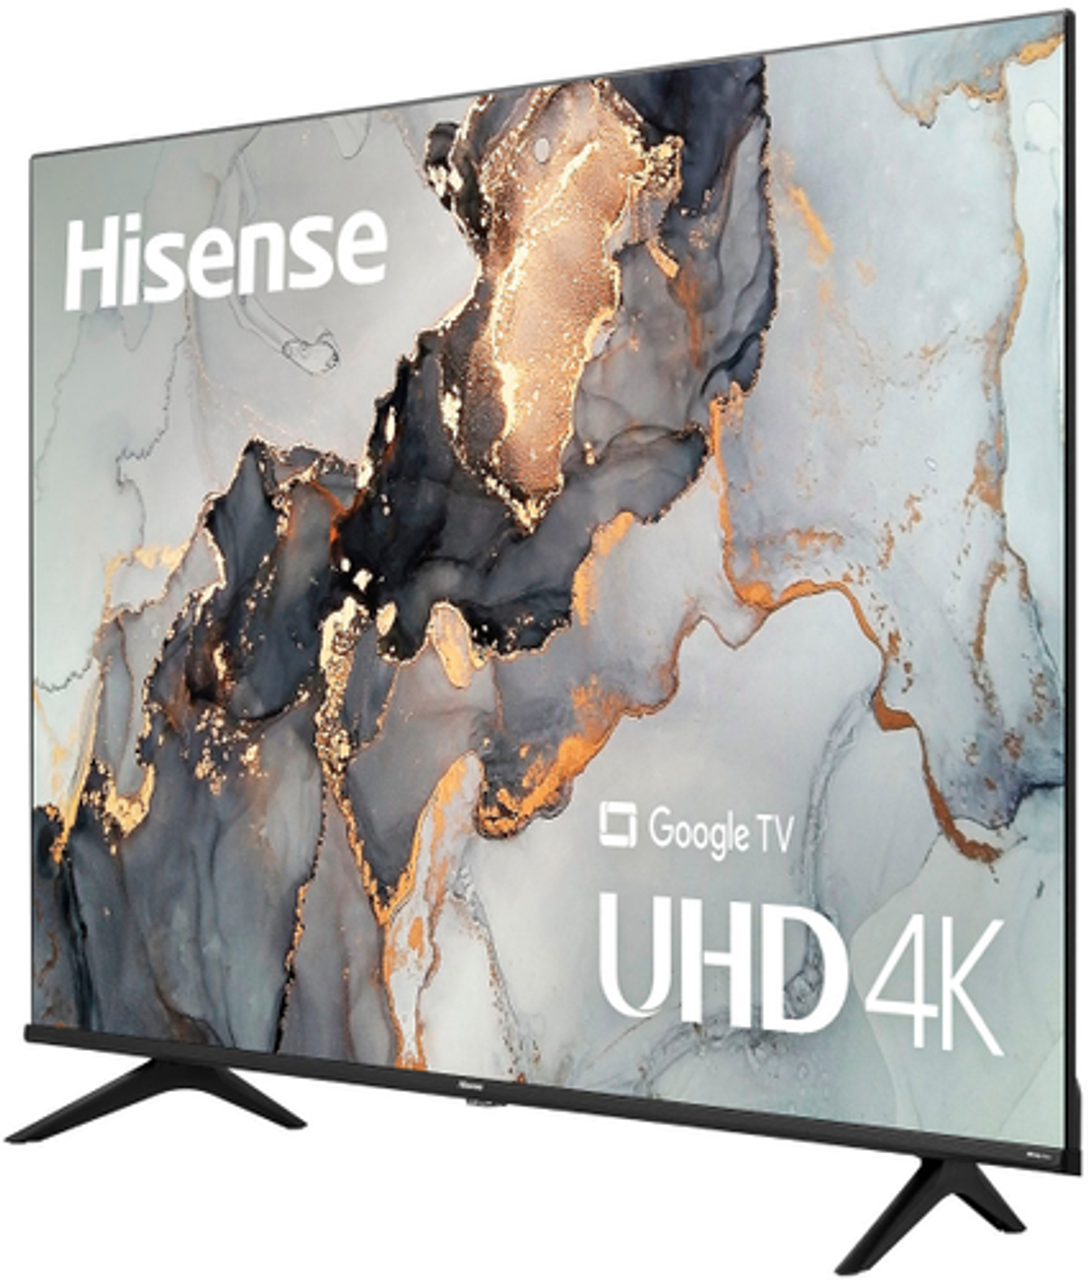 Hisense - 55" Class A6 Series LED 4K UHD Smart Google TV